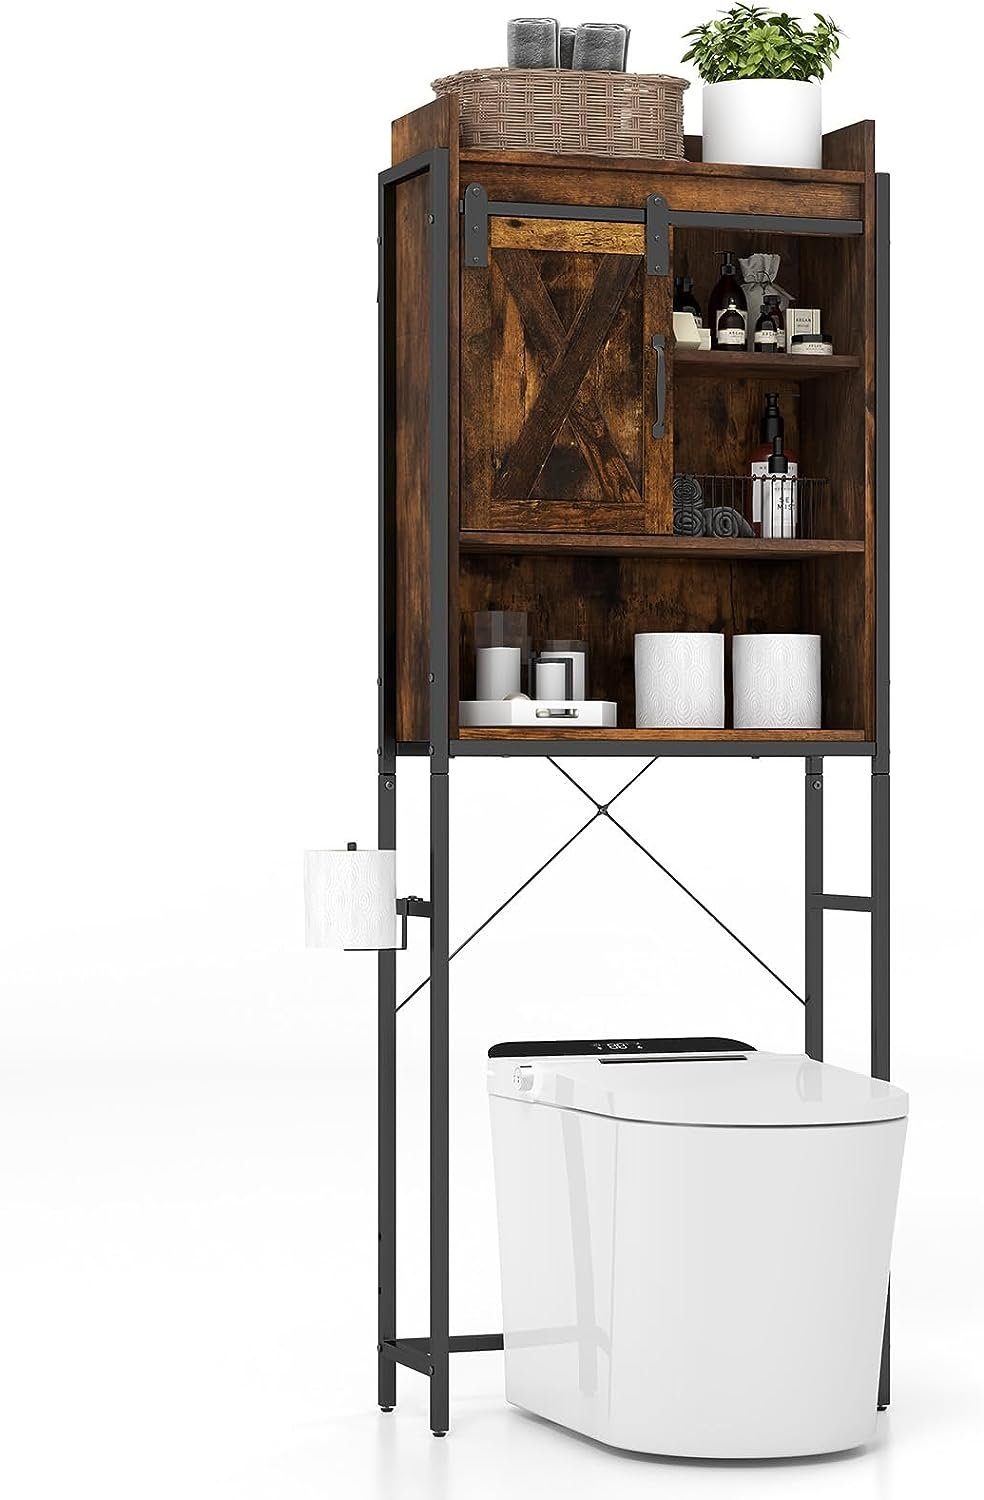 KOMFOTTEU Badregal 4-stöckiger Toilettenschrank, mit Scheunentür Kaffee